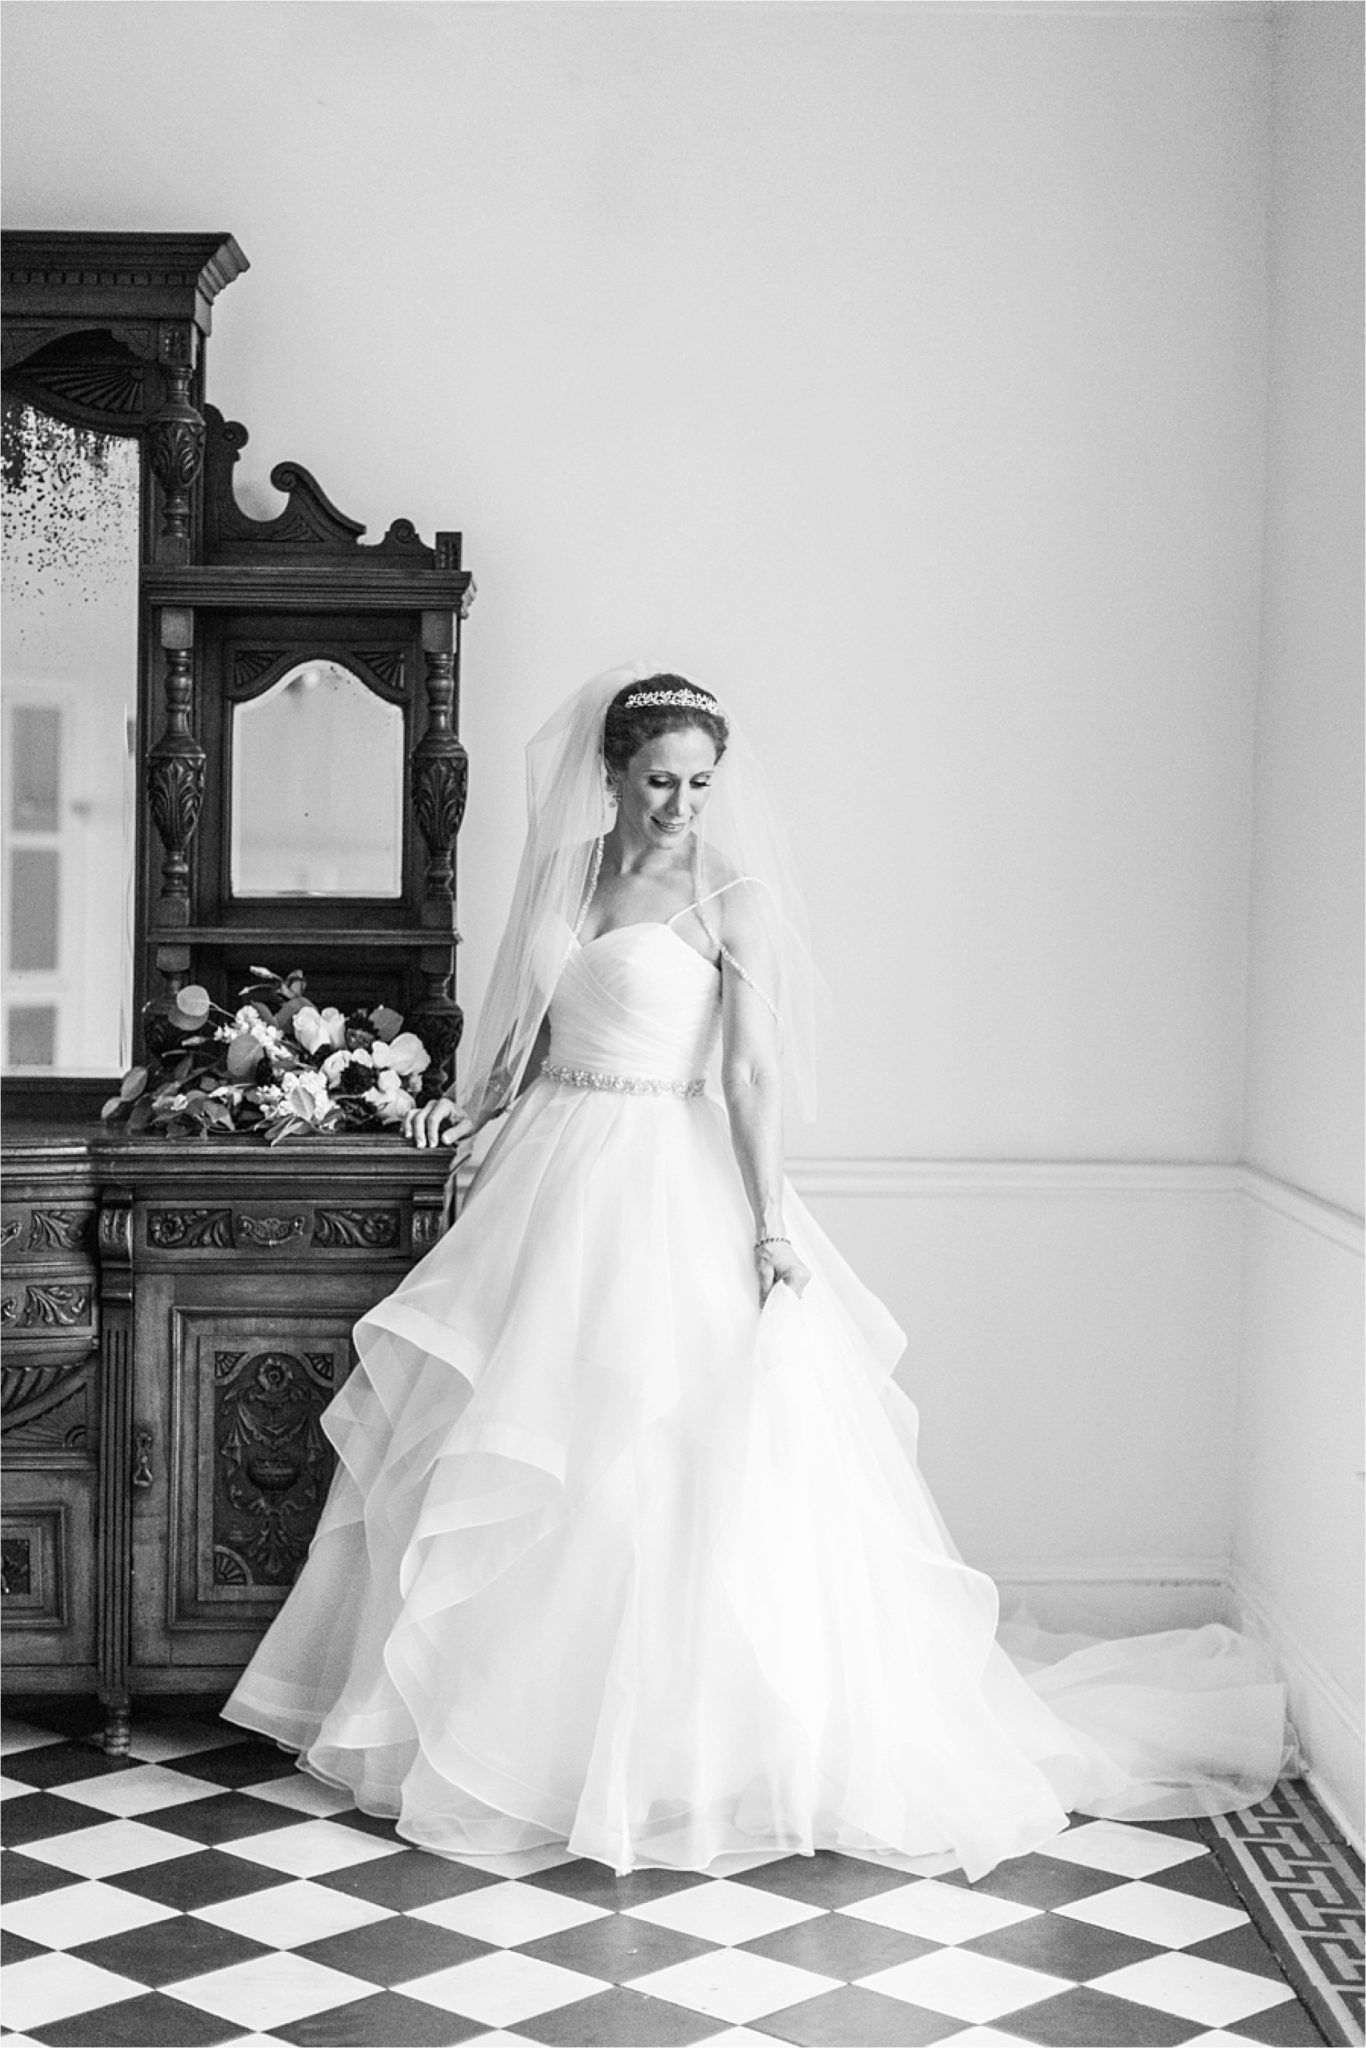 Bridal Session at The Pillars of Mobile-Mobile Alabama Wedding Photographer-Sarra-Bridal session-Wedding dress